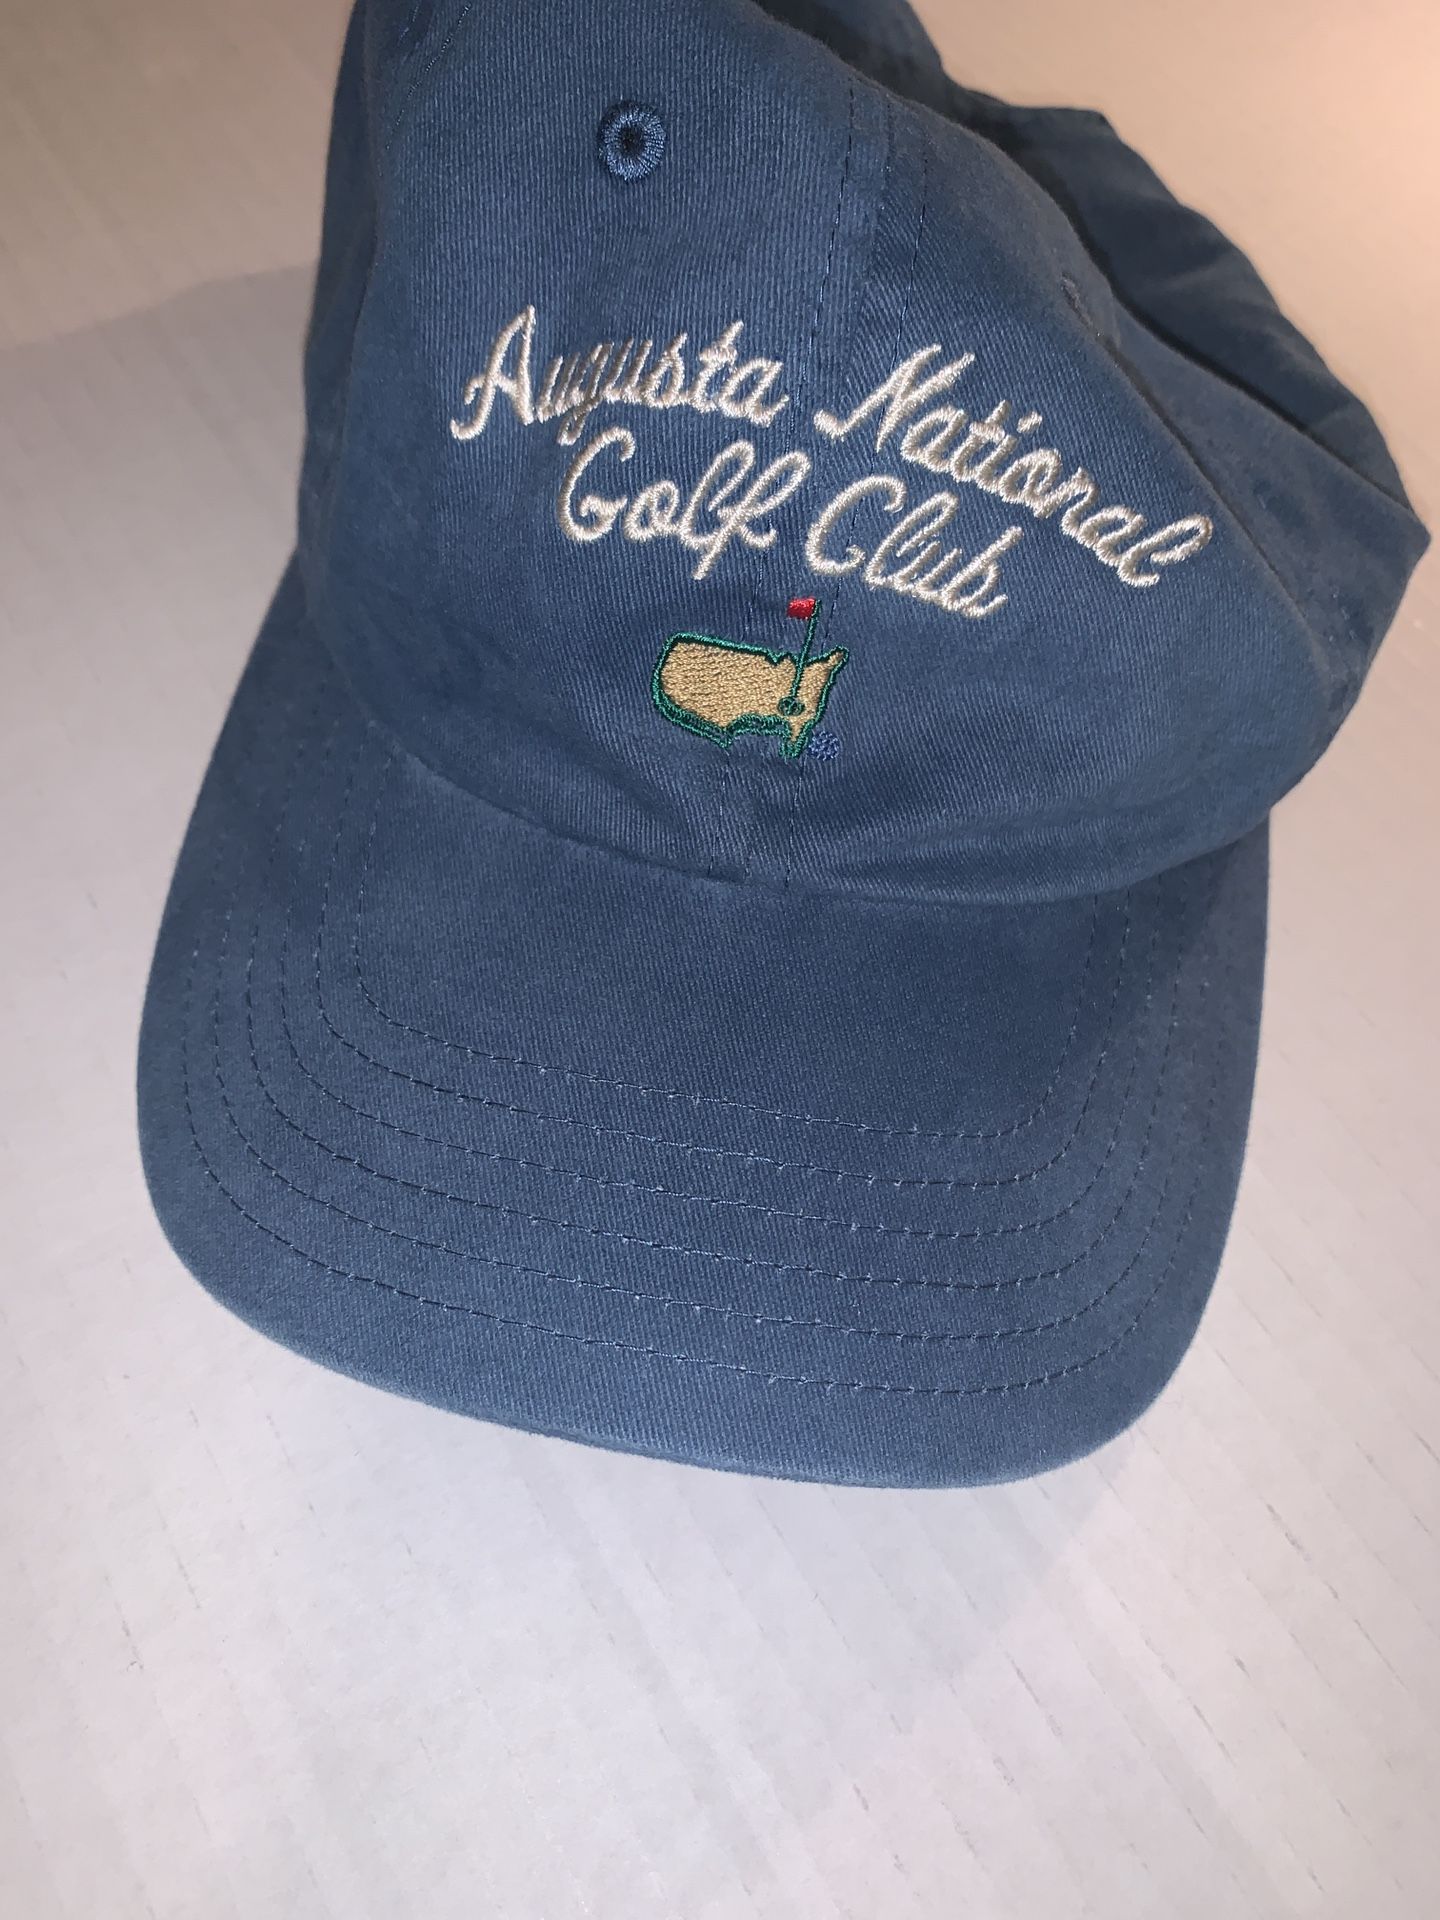 Augusta National Golf Club Adjustable Baseball Hat